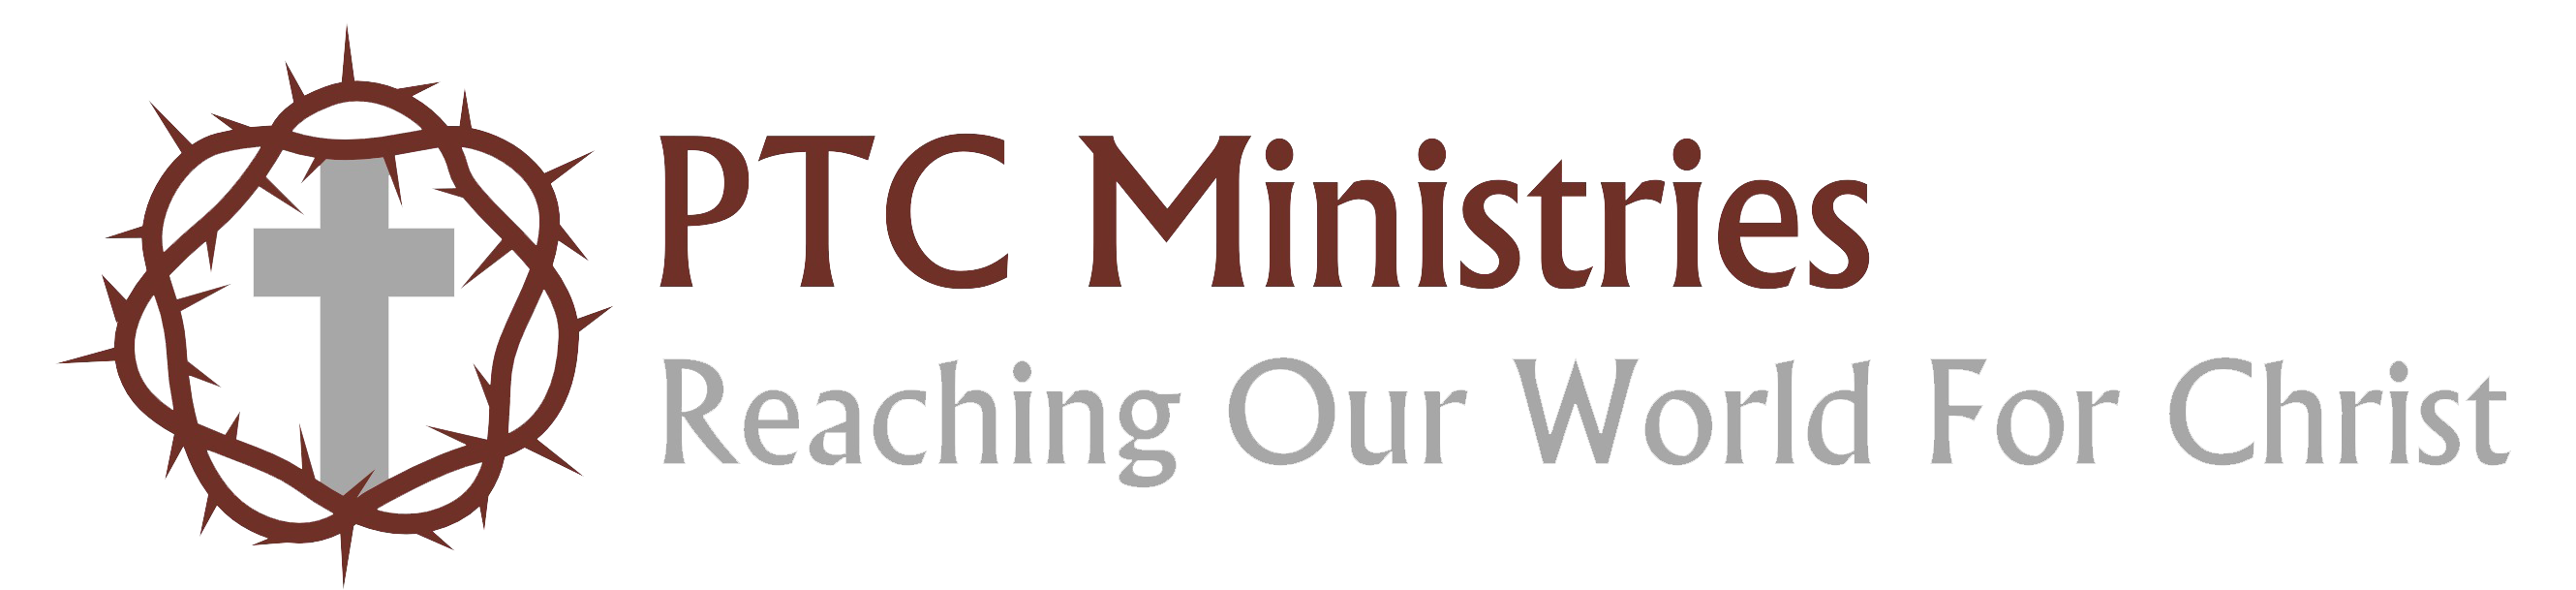 PTC Ministries